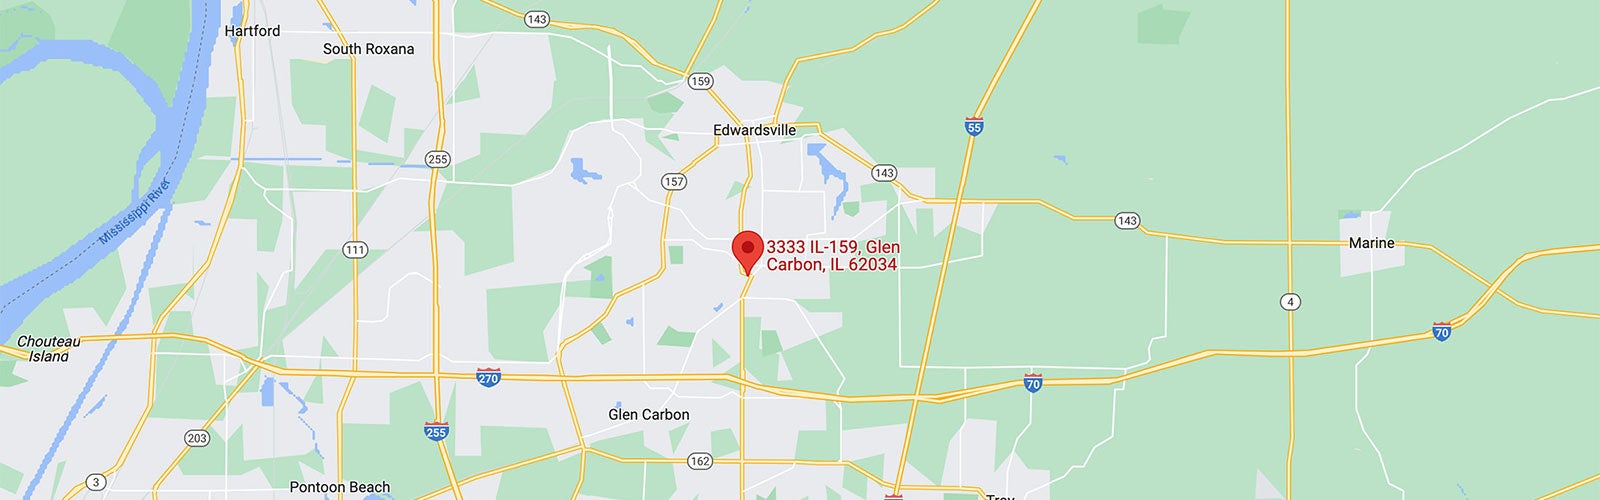 Google Map | Cassens & Sons Inc in Glen Carbon IL